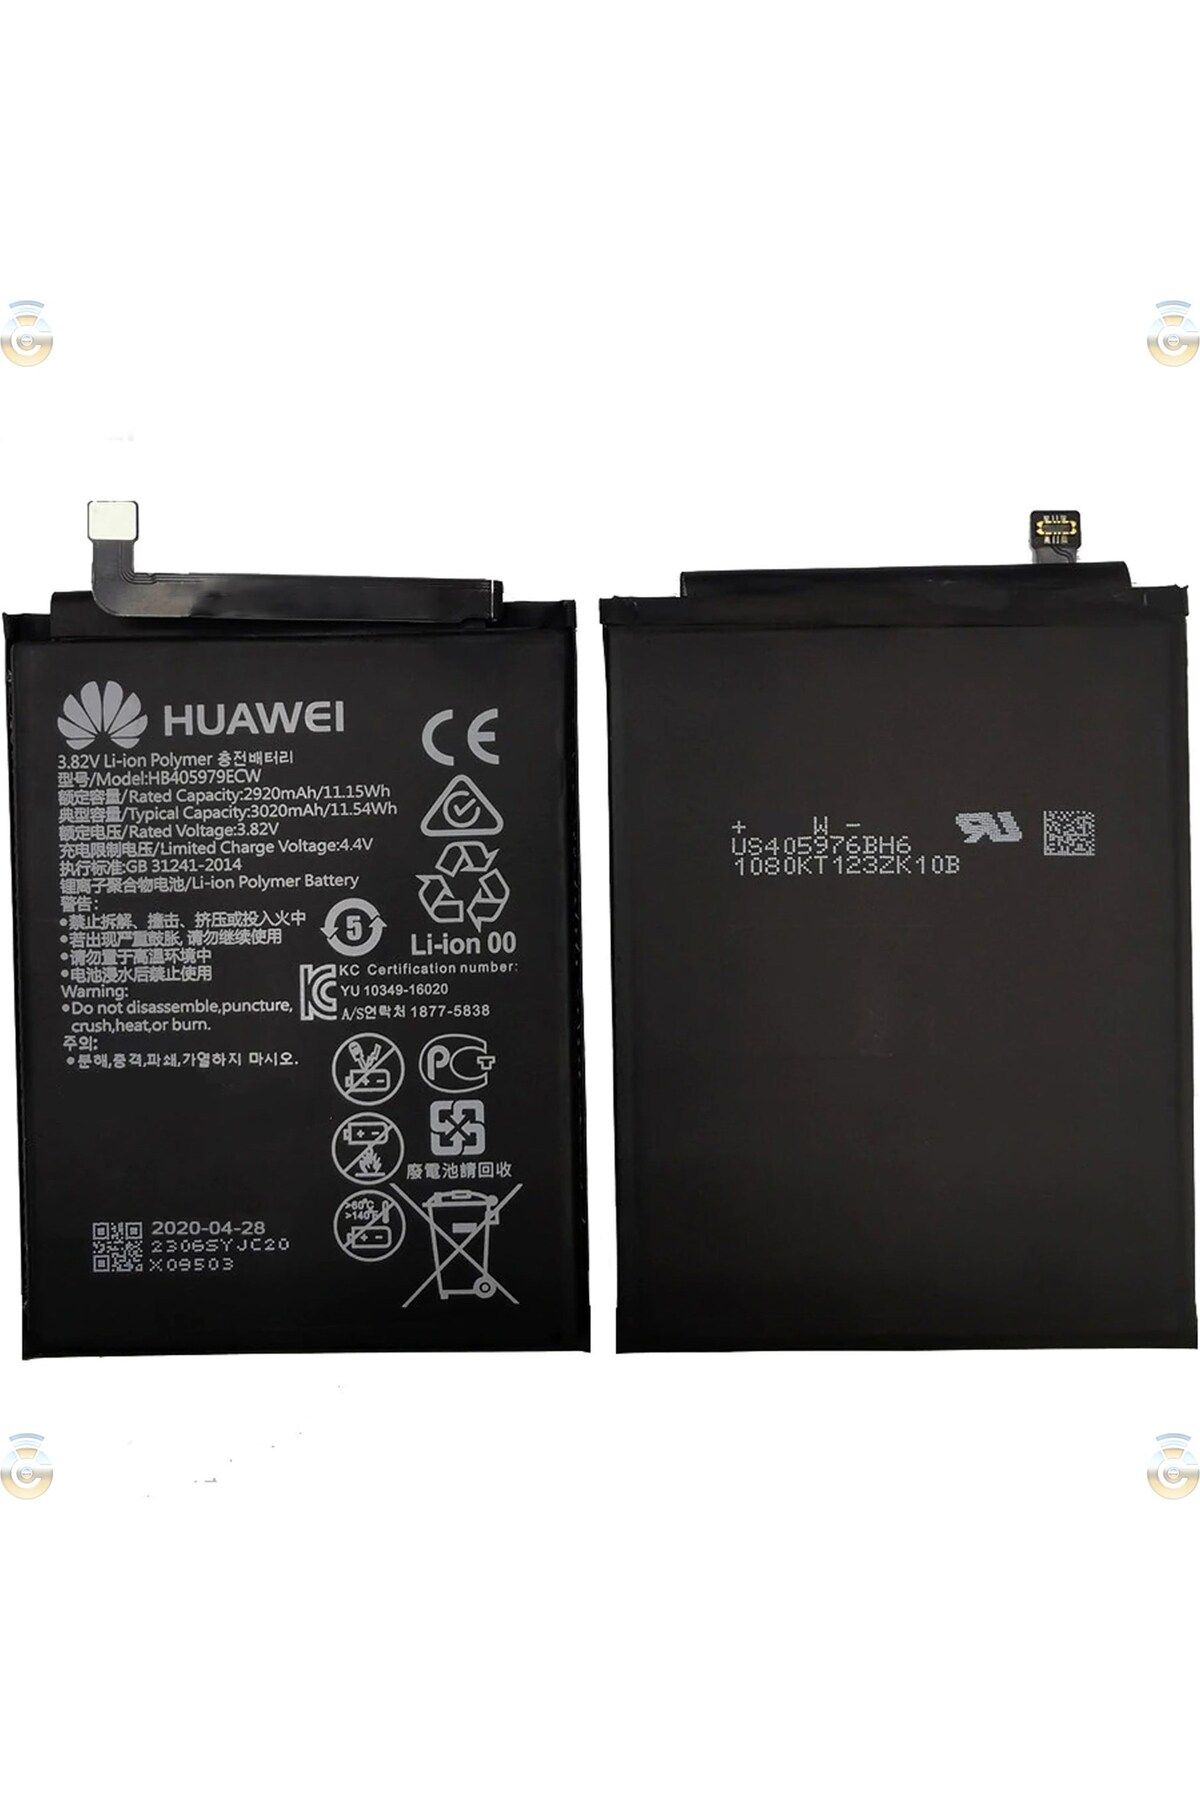 Honor Huawei Honor 7S Hb405979Ecw Batarya Pil